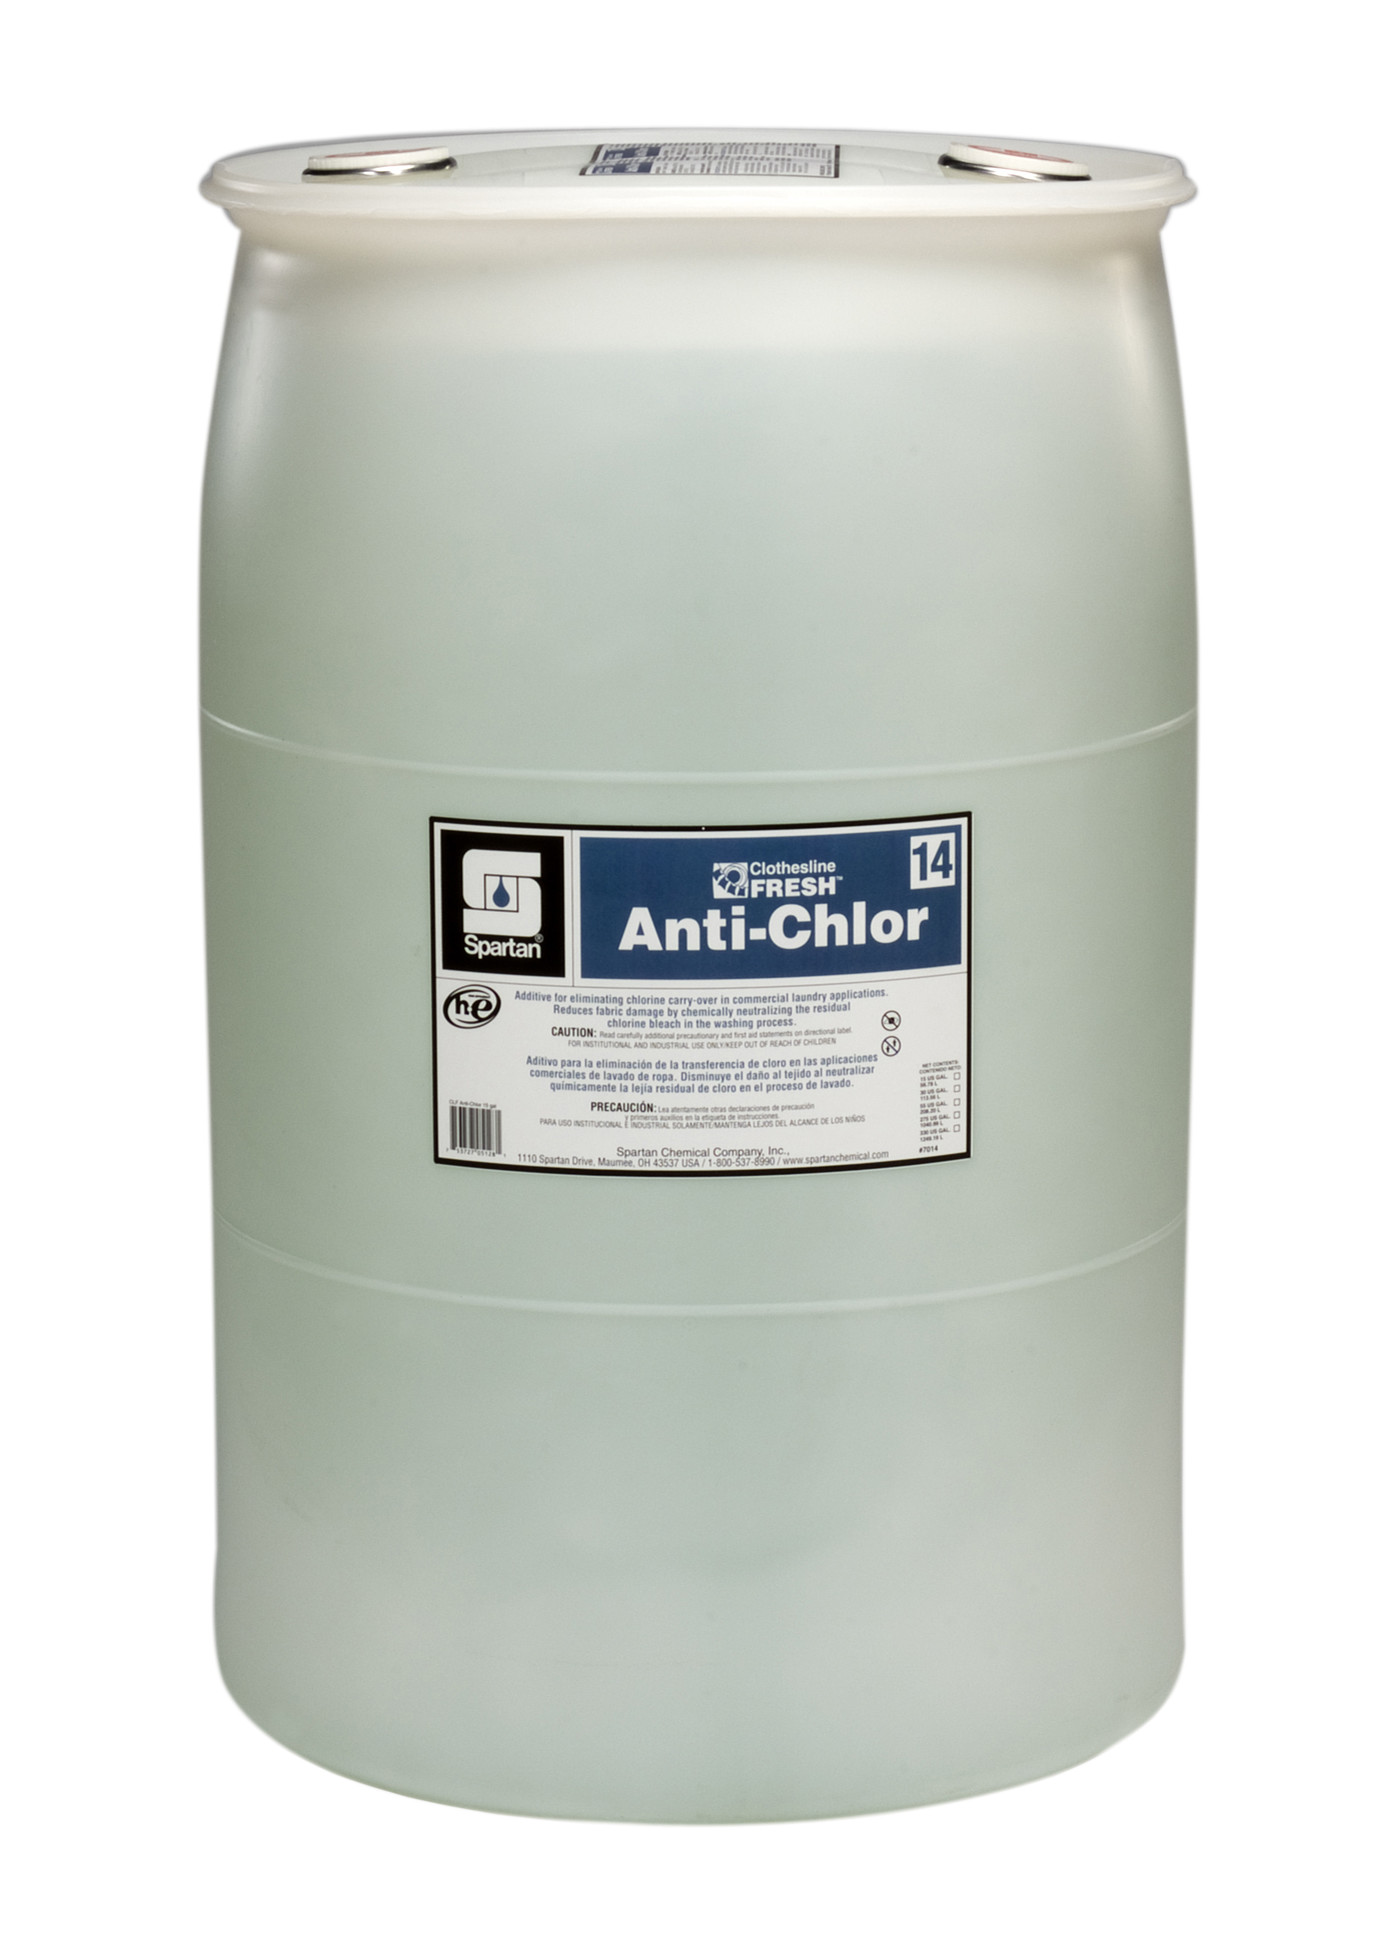 Spartan Chemical Company Clothesline Fresh Anti-Chlor 14, 55 GAL DRUM